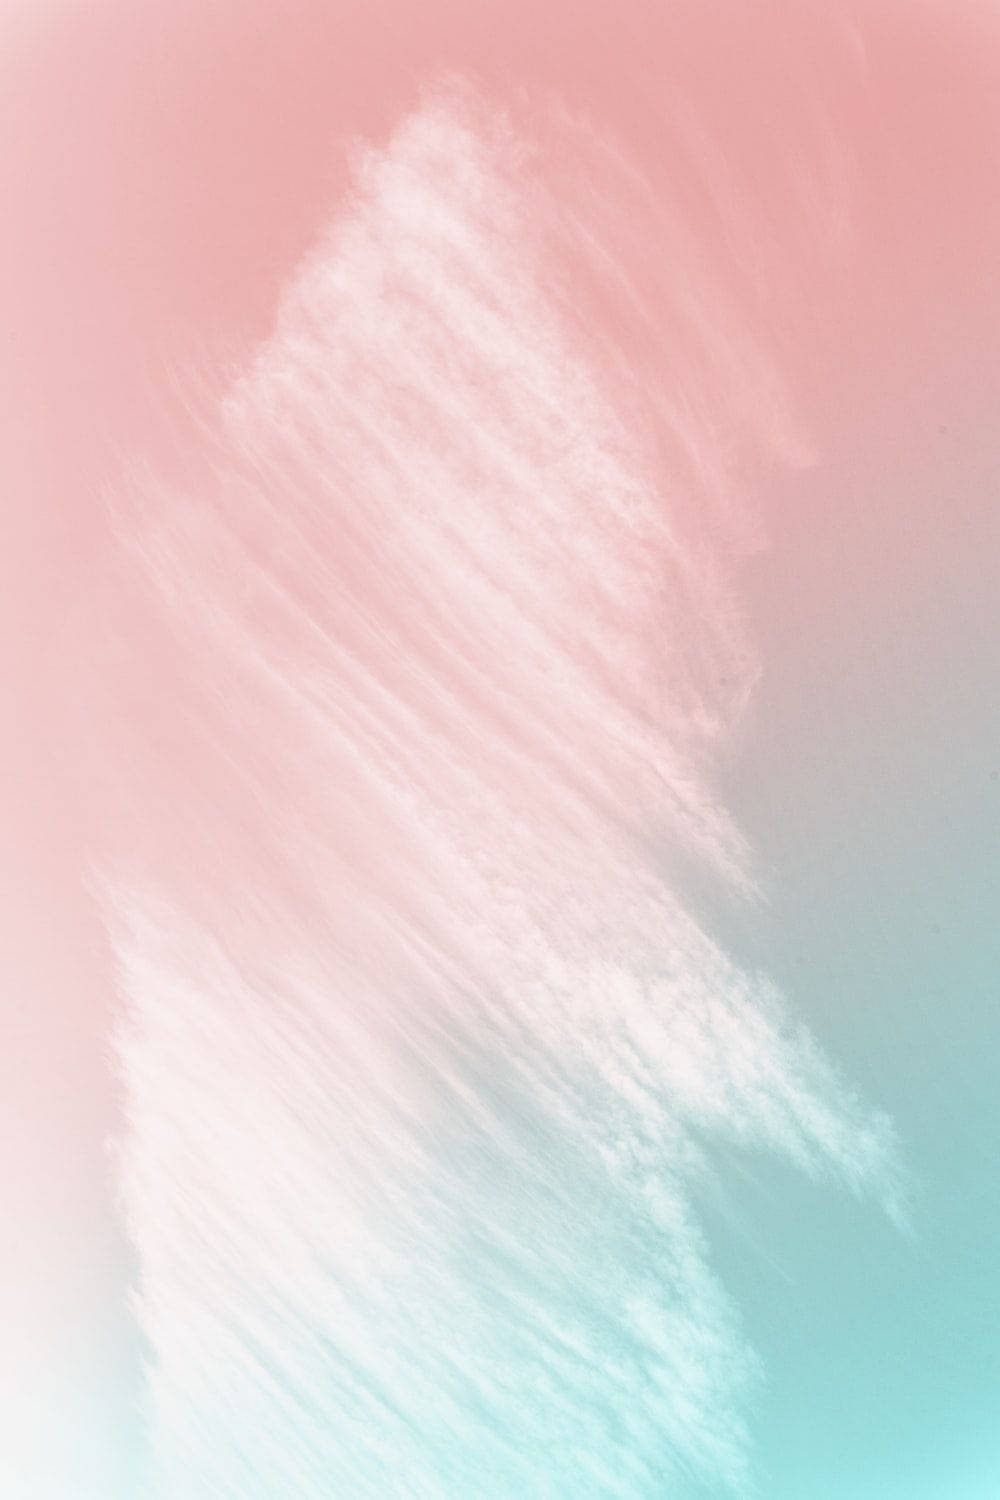 Pastel Ipad Gradient Pink Cyan Picture